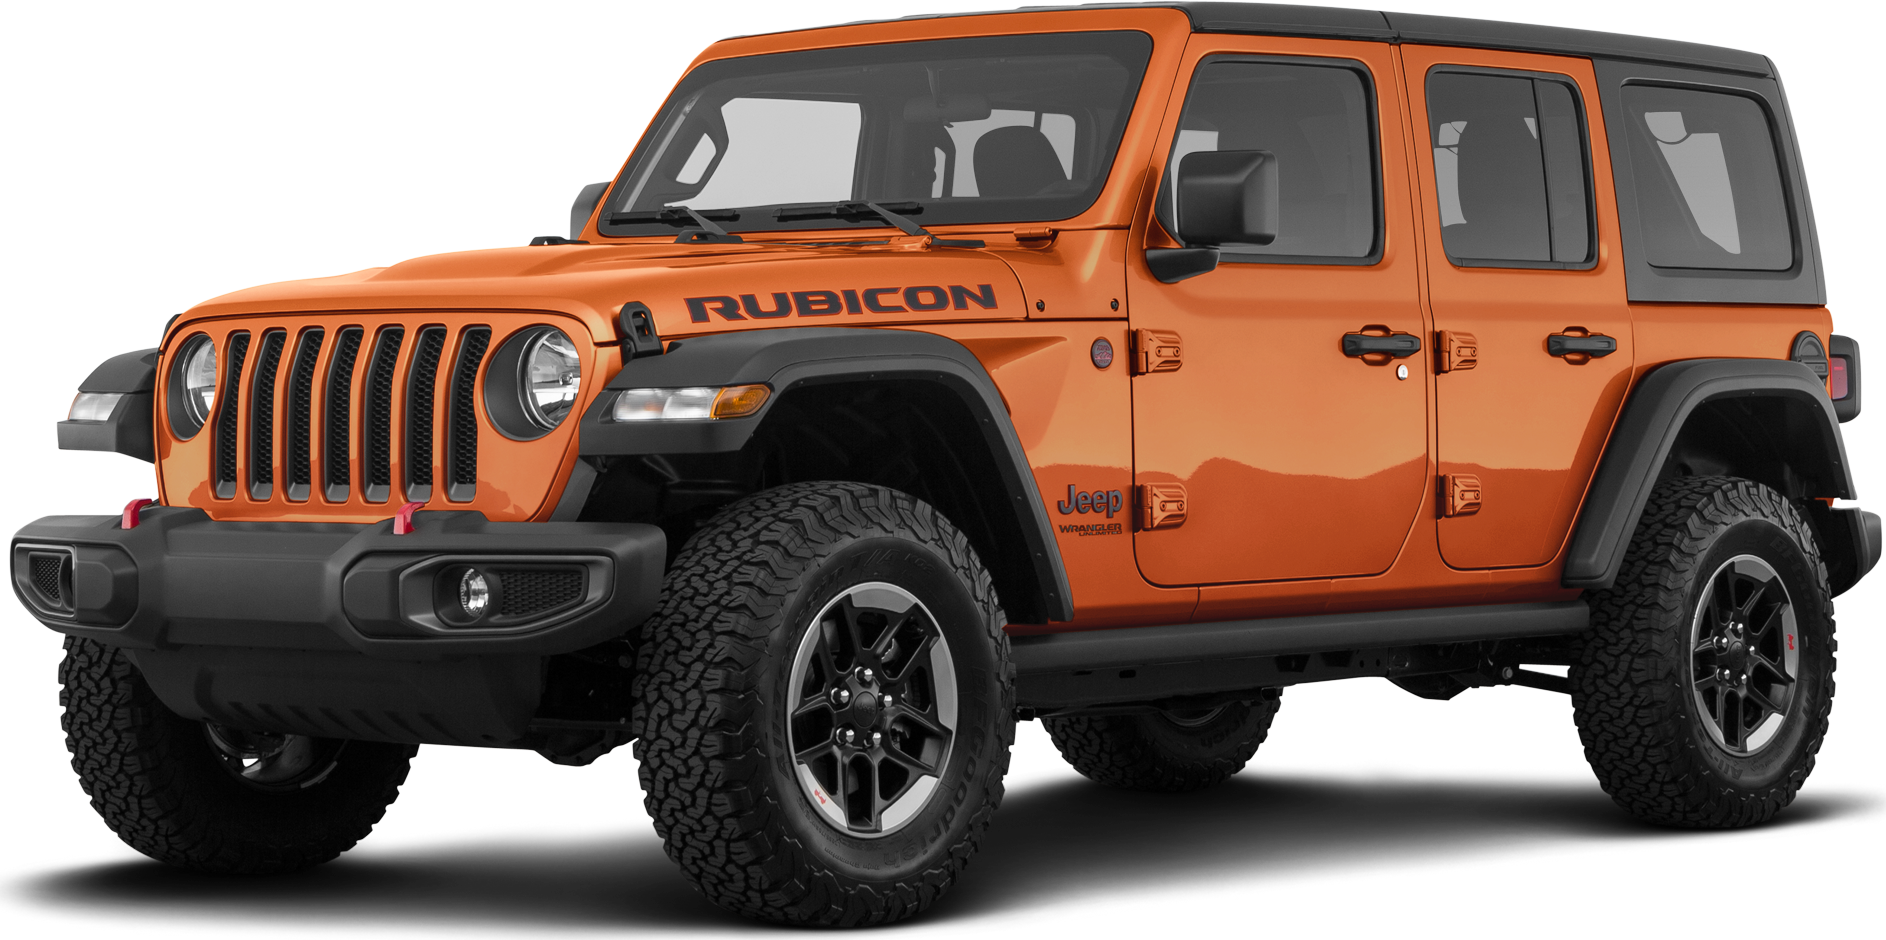 2018 Jeep Wrangler Unlimited Rubicon Automatic: Max Swagger